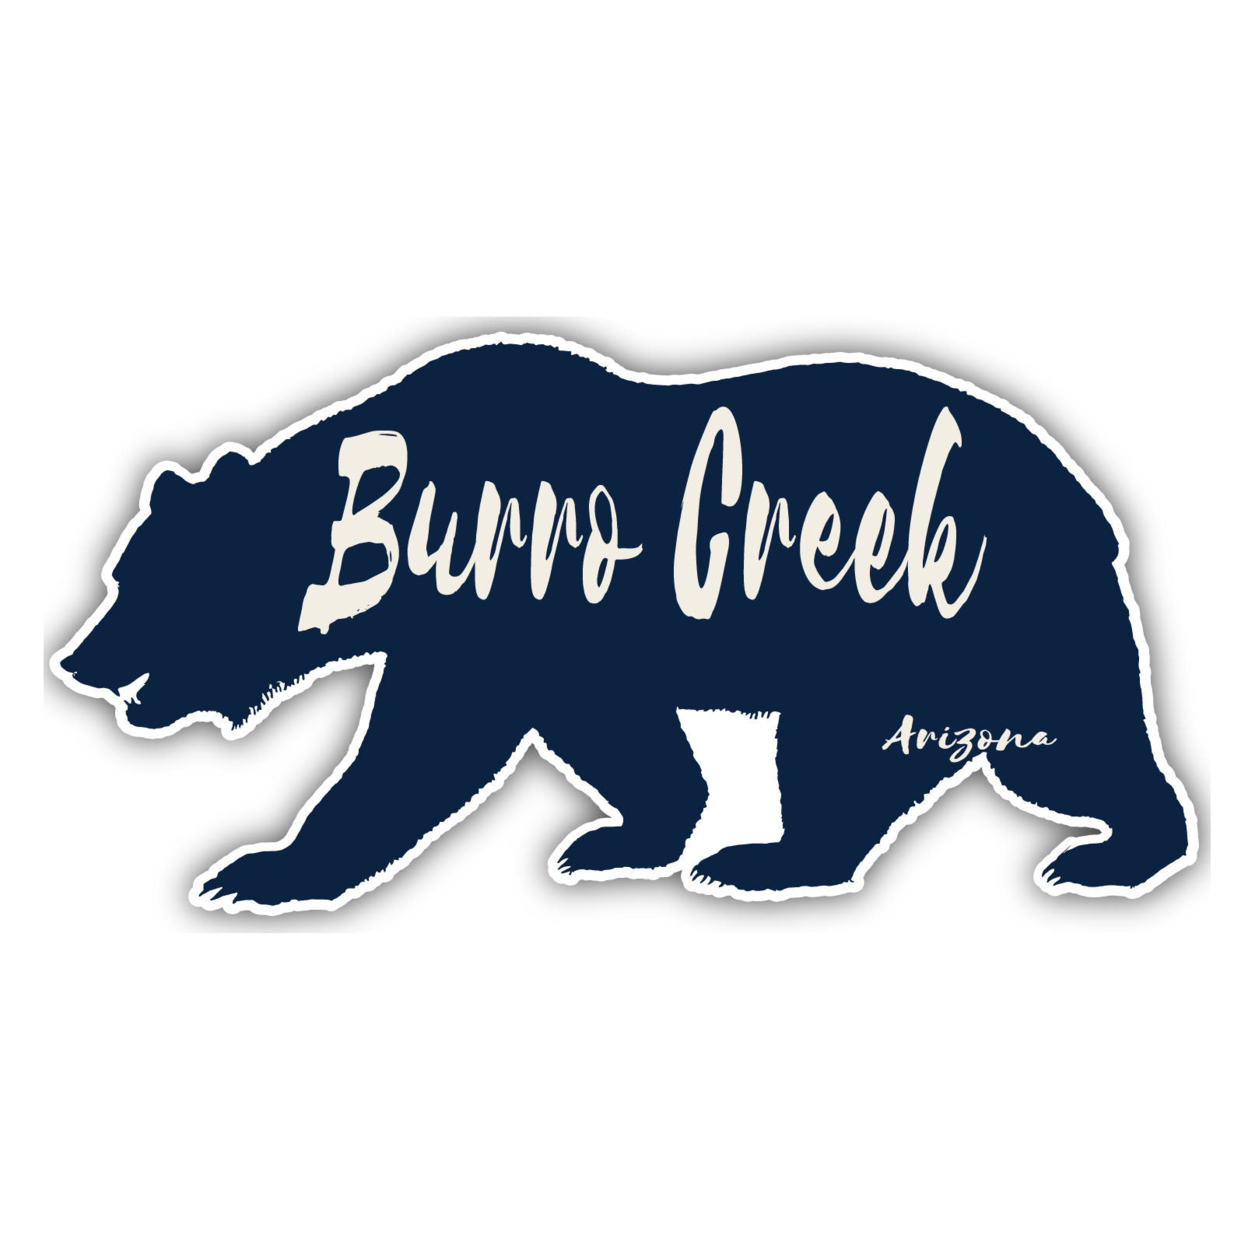 Burro Creek Arizona Souvenir Decorative Stickers (Choose Theme And Size) - 4-Pack, 8-Inch, Bear